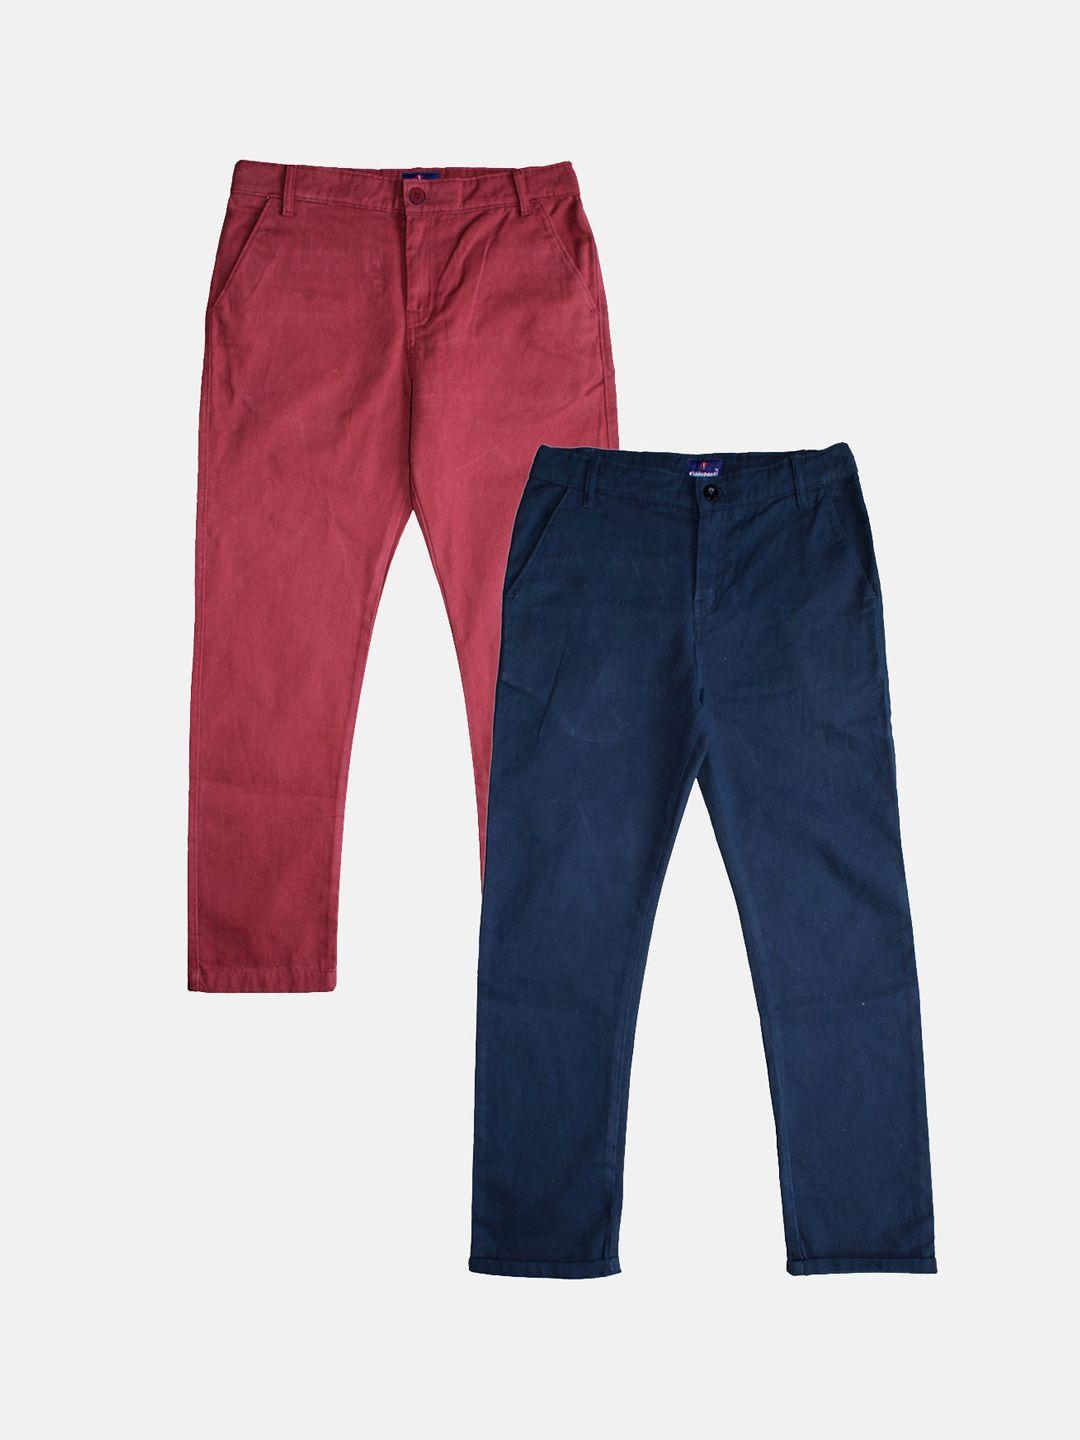 kiddopanti boys pack of 2 pure cotton chinos trousers